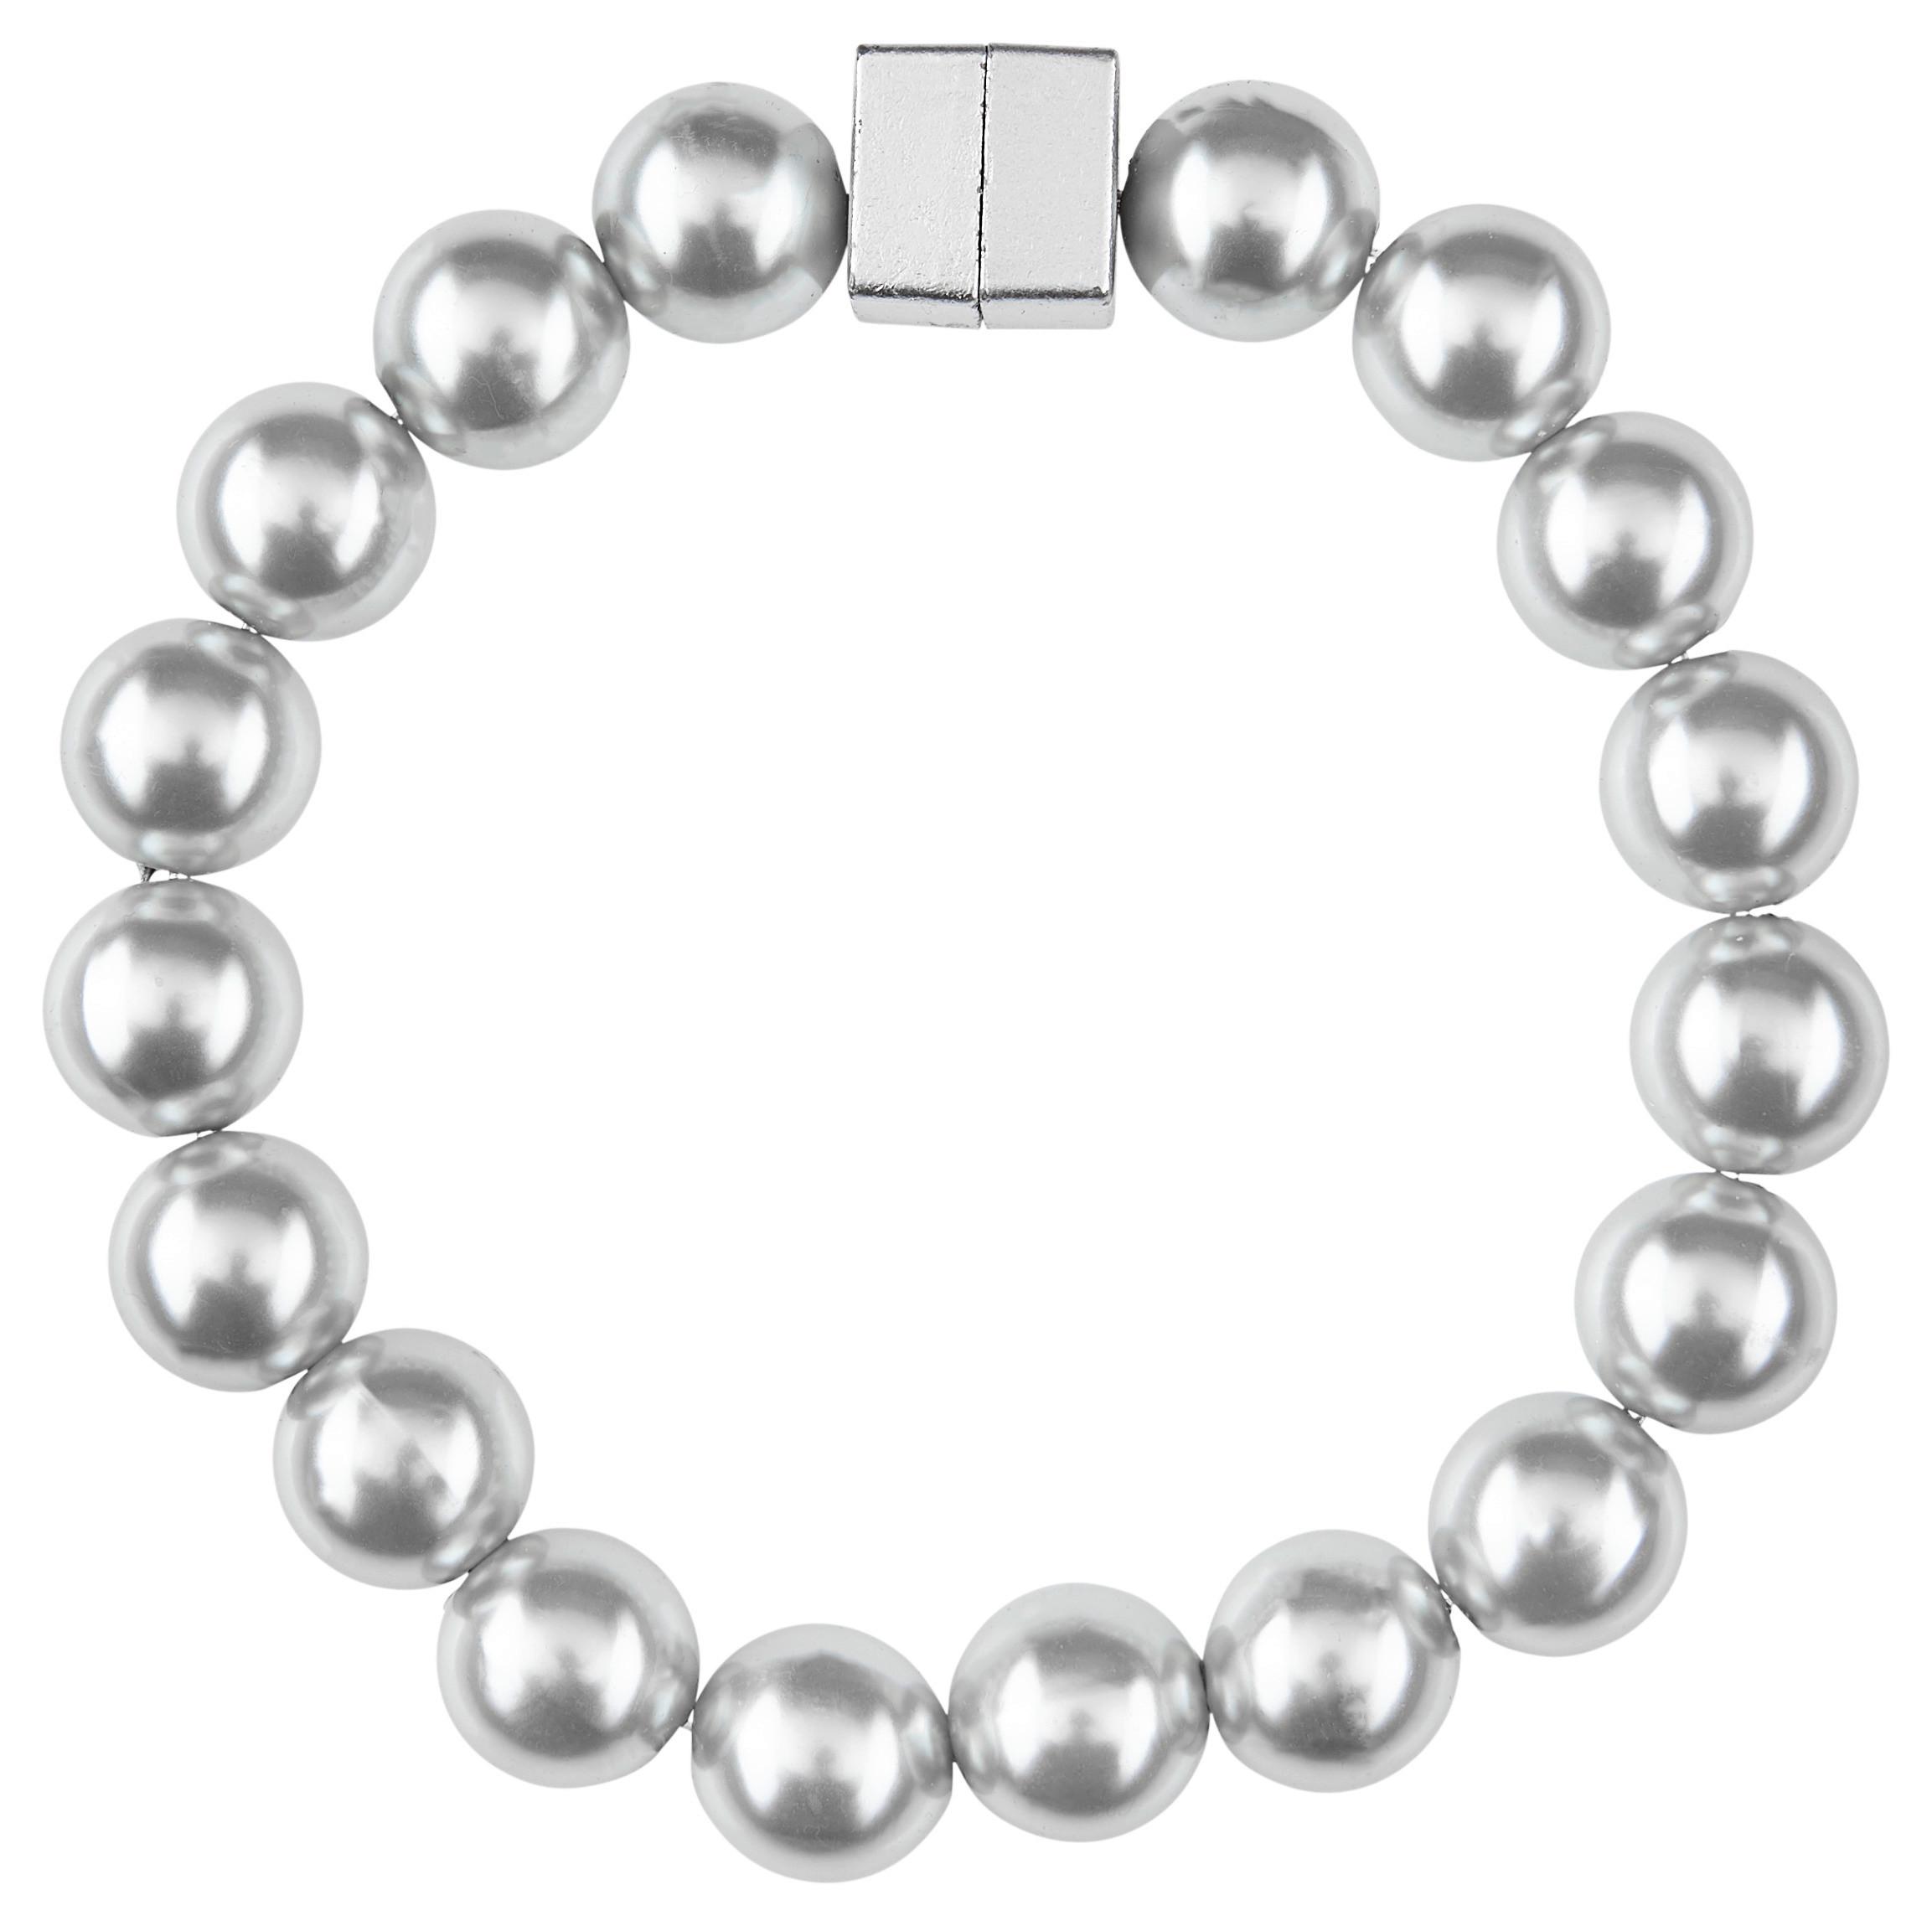 Raffhalter Perlenkette in Silber - Silberfarben, ROMANTIK / LANDHAUS, Kunststoff (29cm) - Modern Living